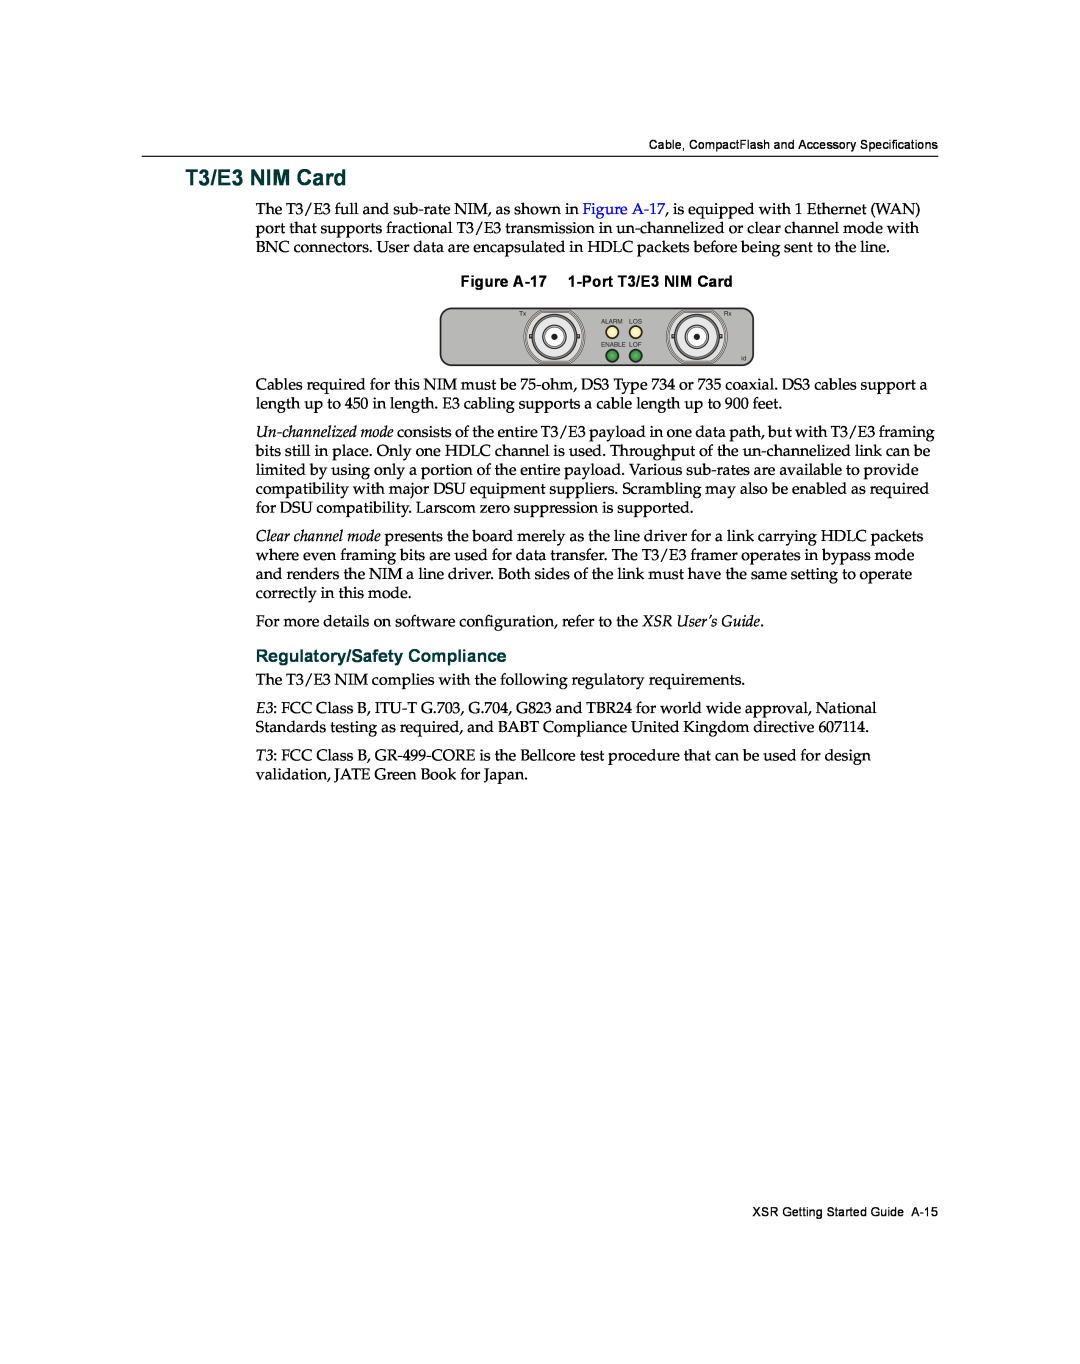 Enterasys Networks XSR-3020 manual Regulatory/Safety Compliance, Figure A-17 1-Port T3/E3 NIM Card 